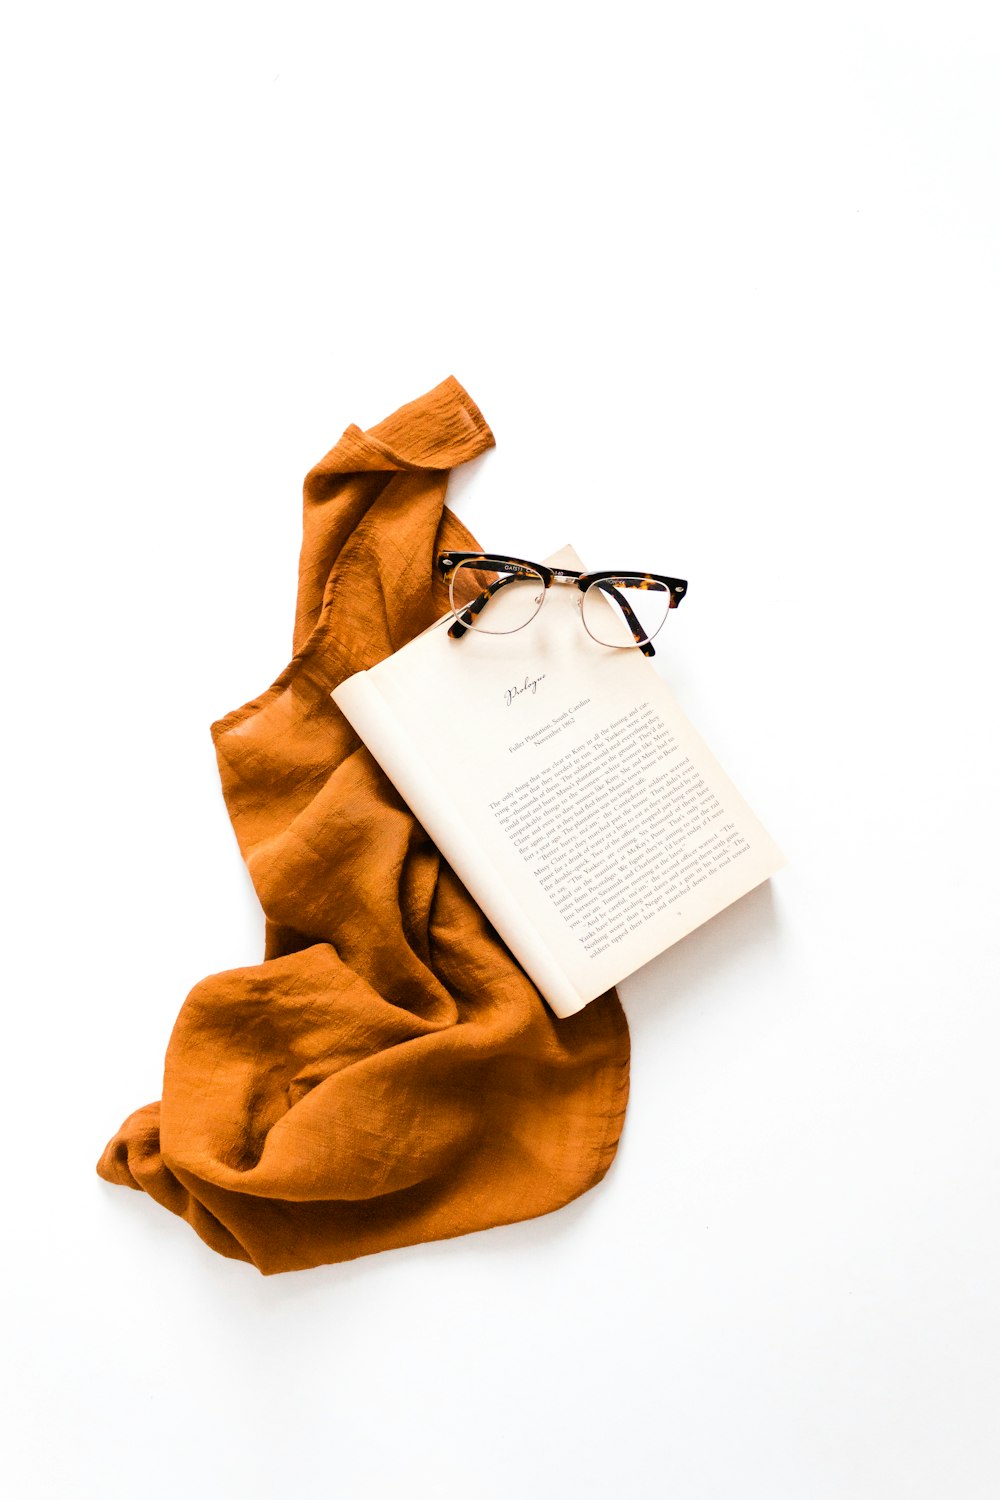 orange scarf with white card